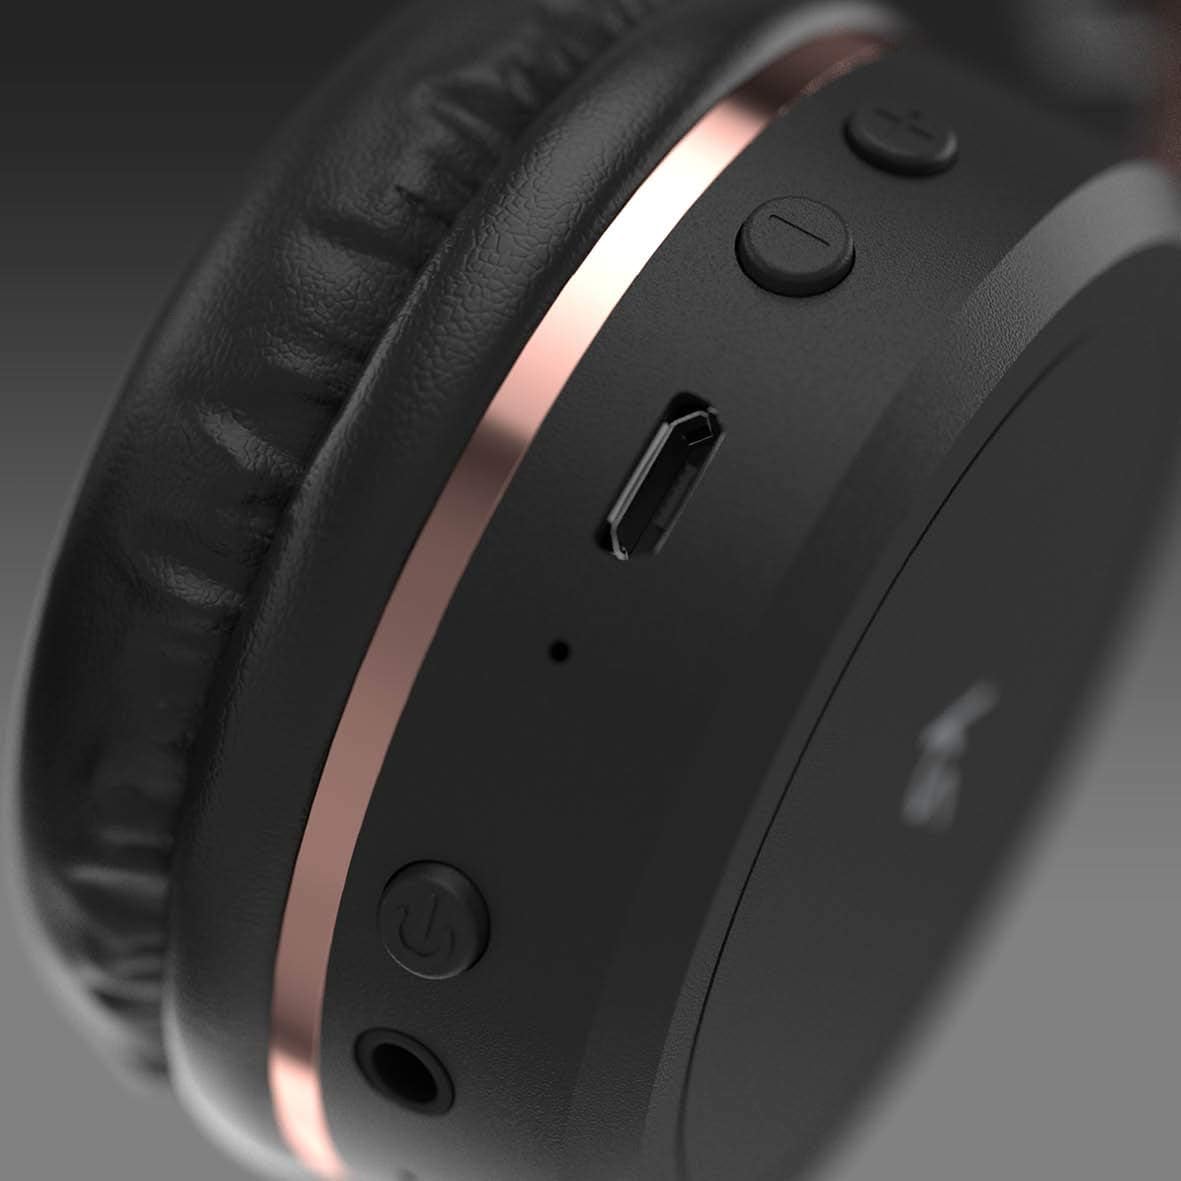 KitSound Metro X Wireless On-Ear Headphones - Black - Refurbished Good